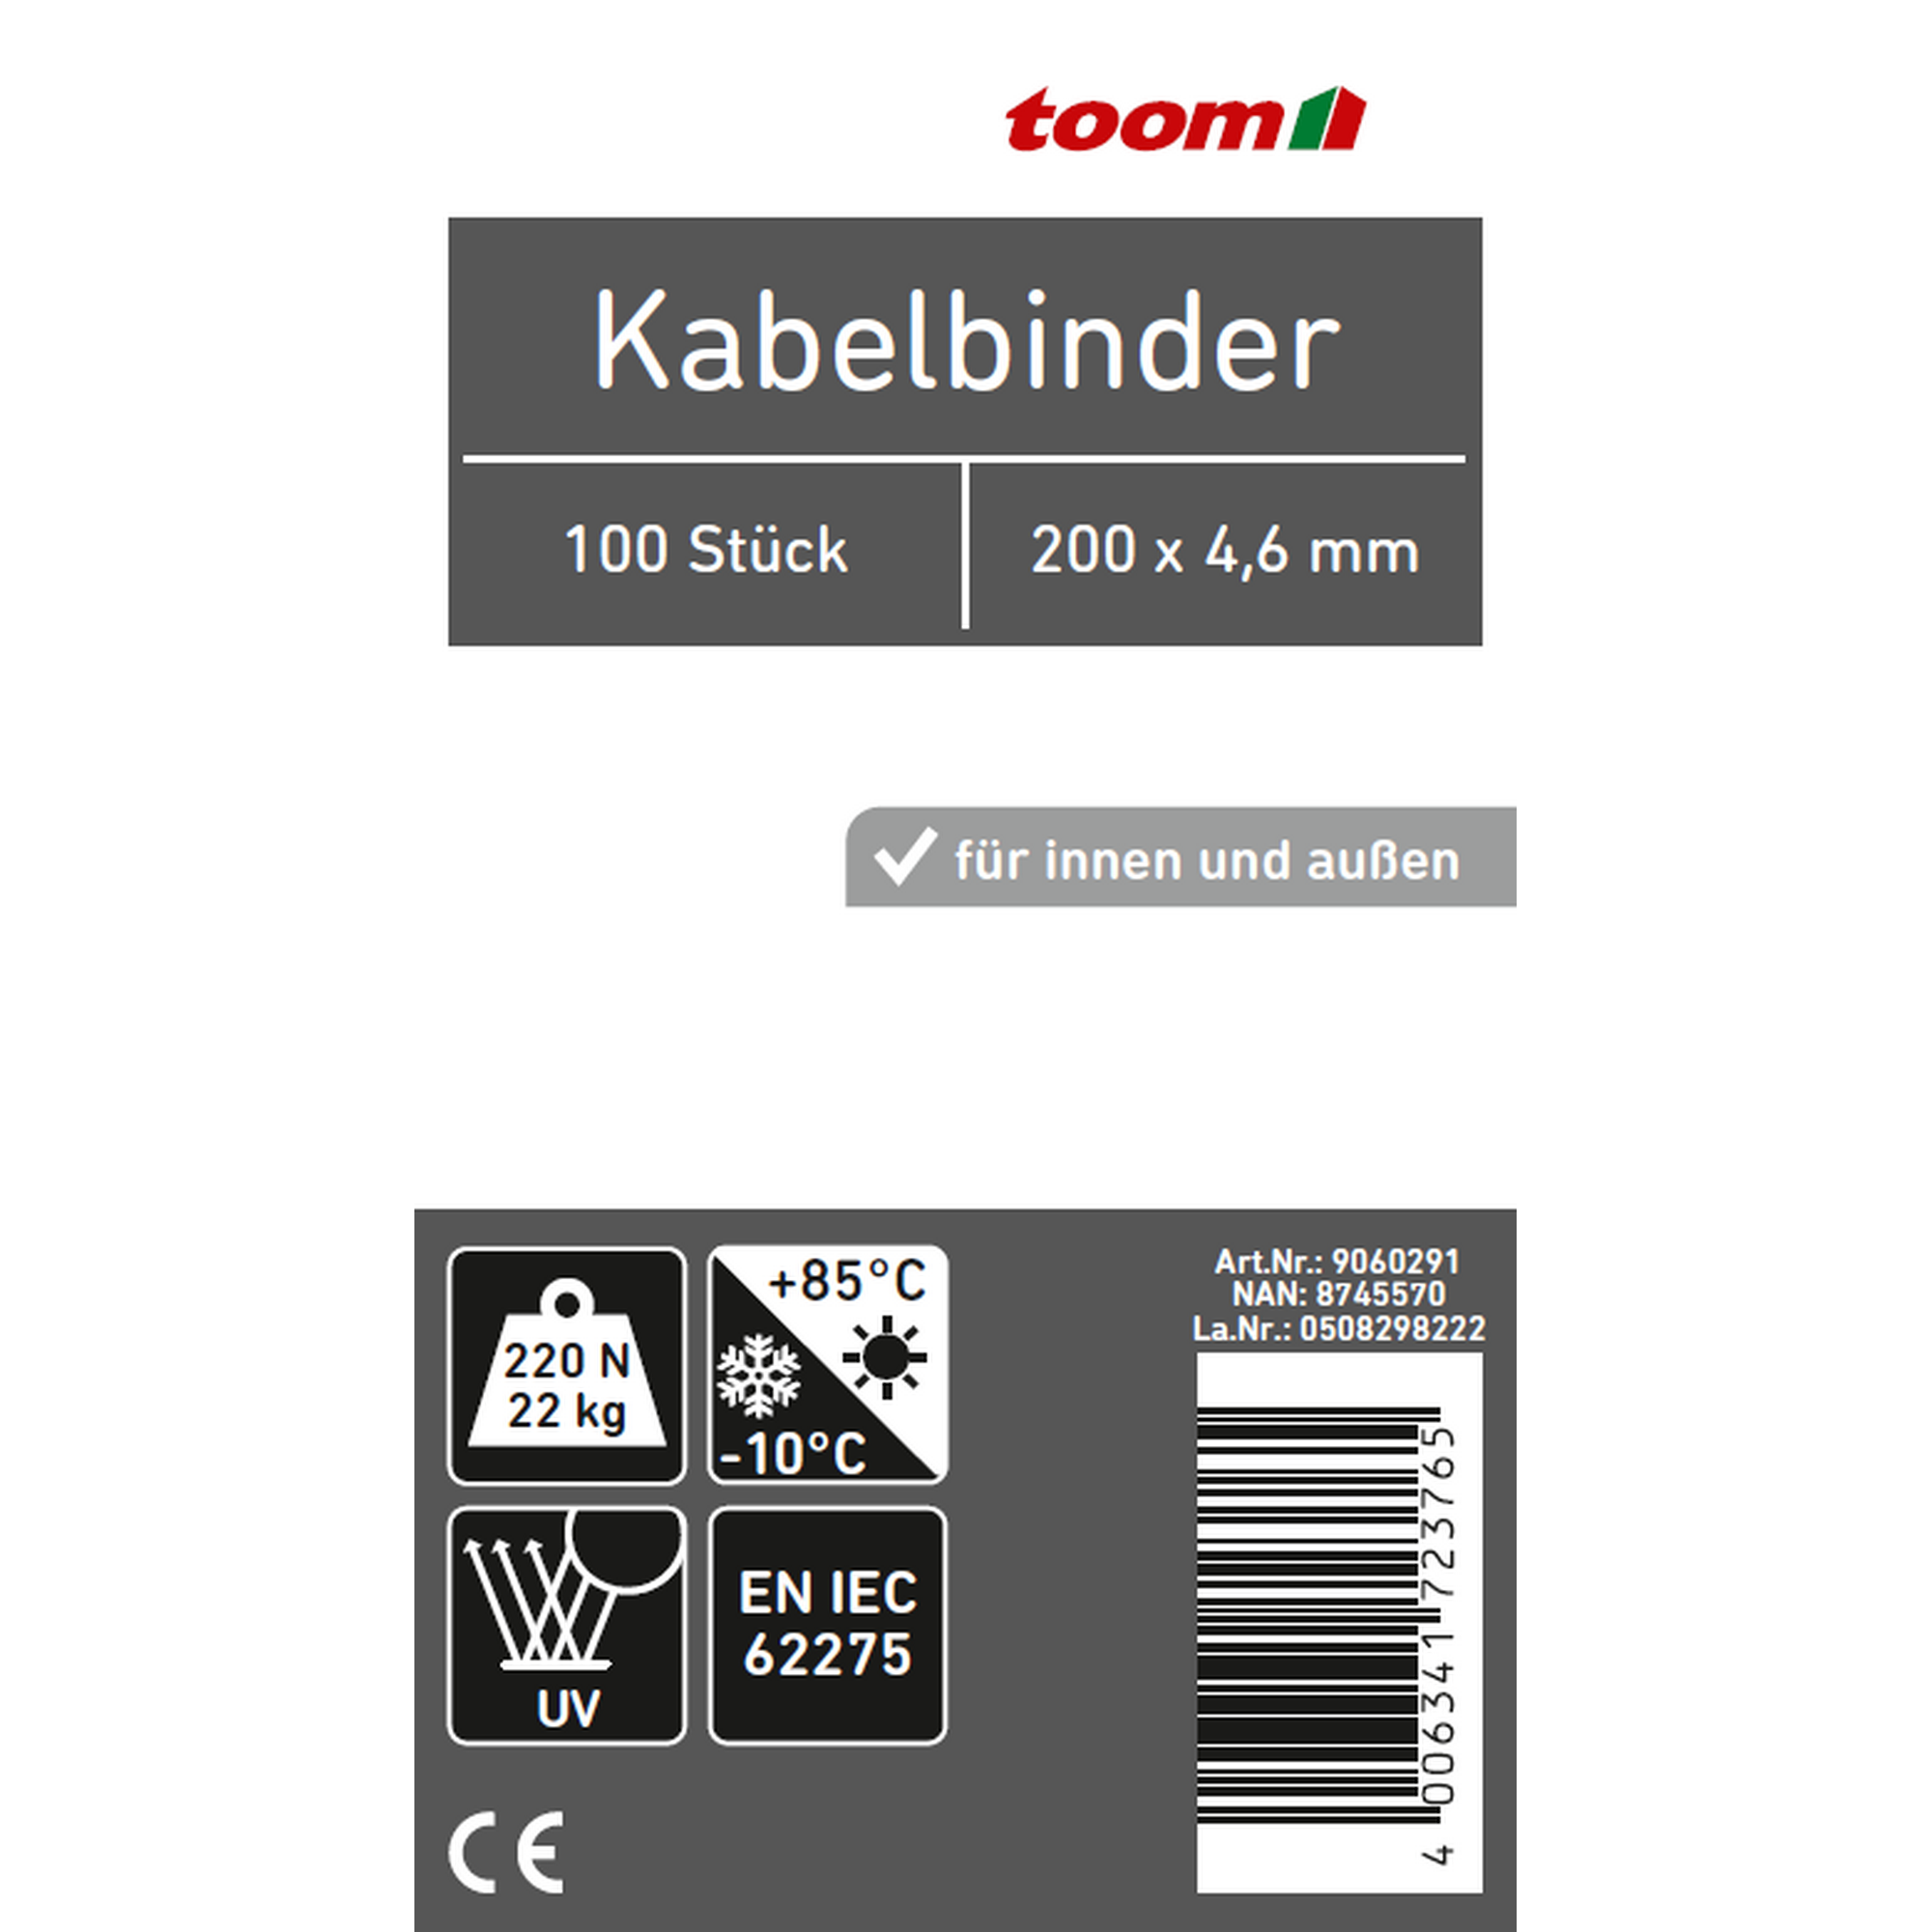 Kabelbinder schwarz 4,6 x 200 mm 100 Stück + product picture